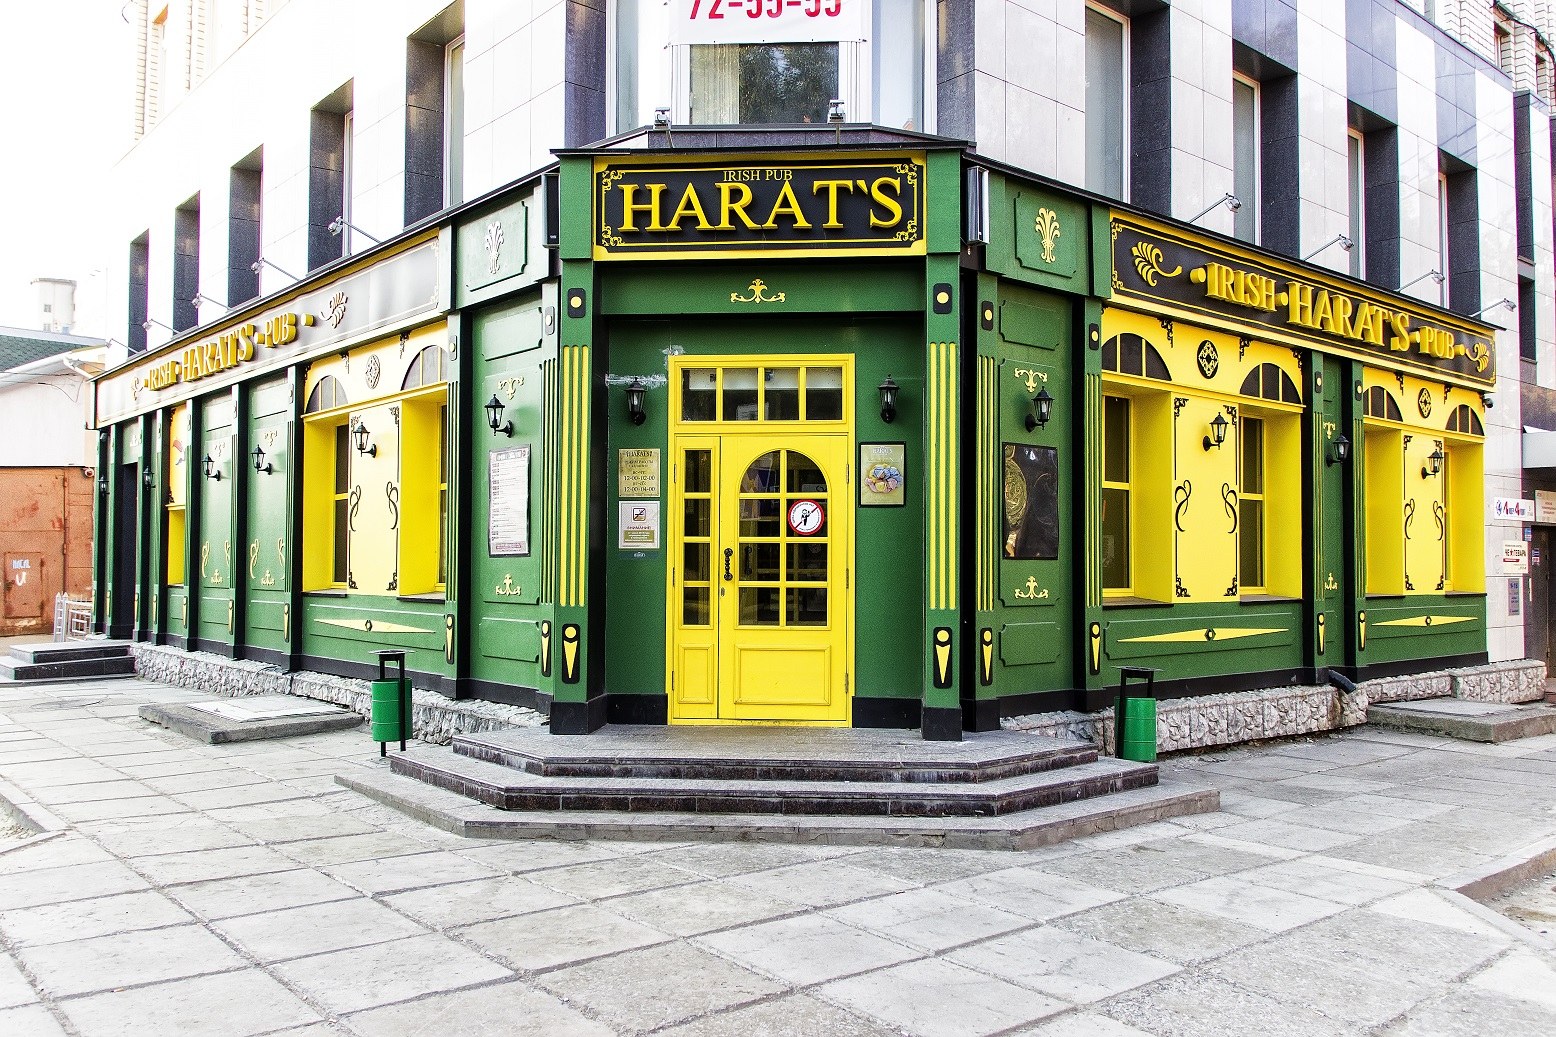 Irish москва. Ирландский паб Харатс. Ирландский паб Harat's. Harat's Irish pub Тюмень. Ирландский паб Брянск.